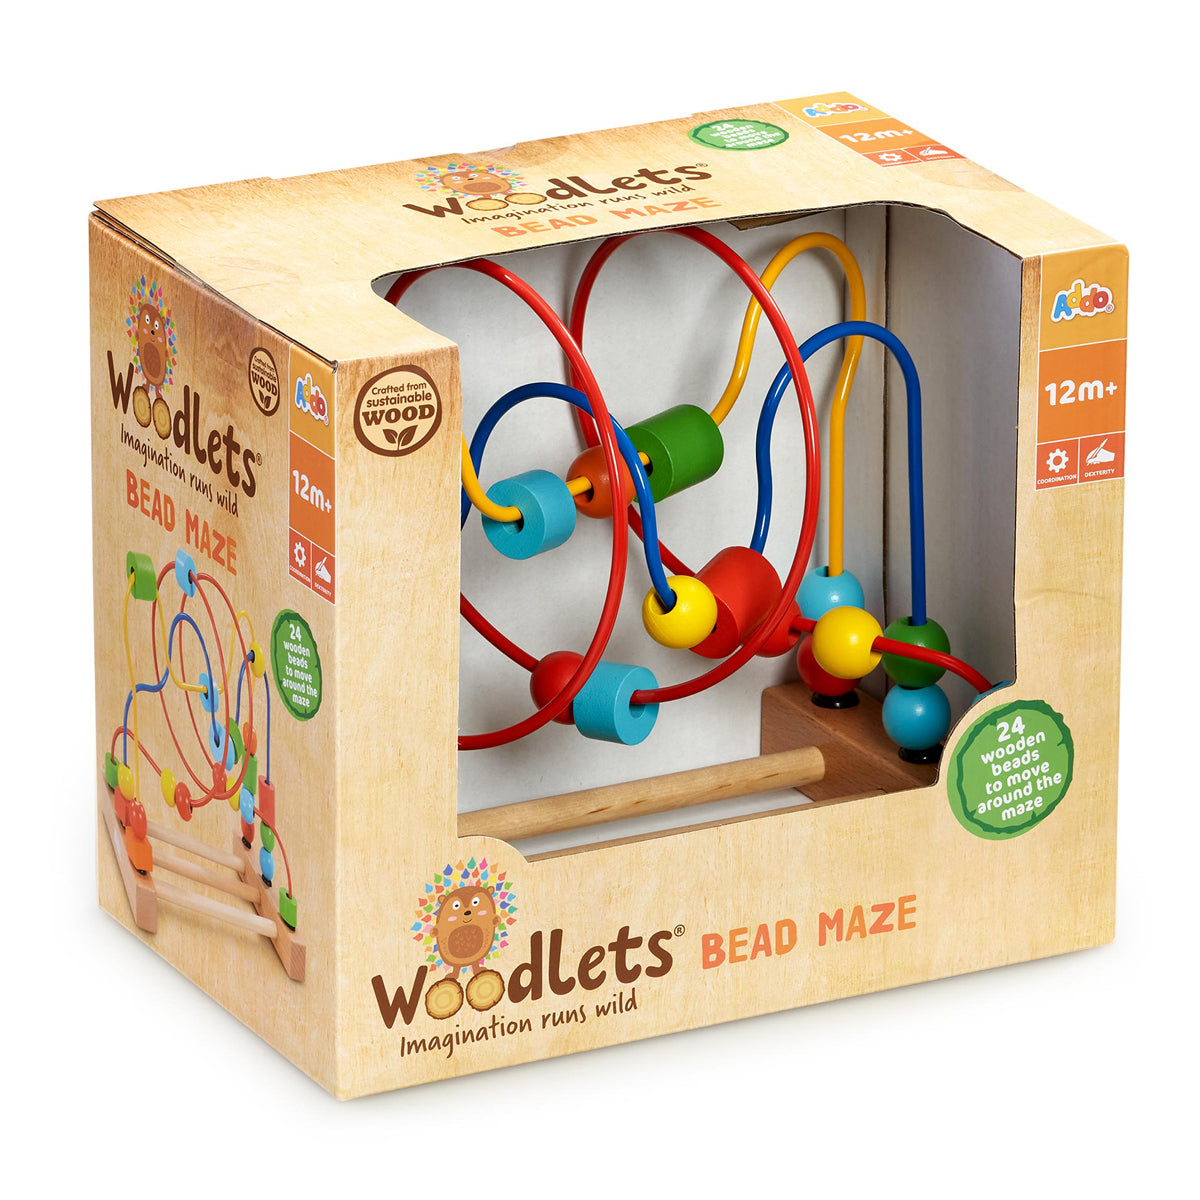 Woodlets Bead Maze